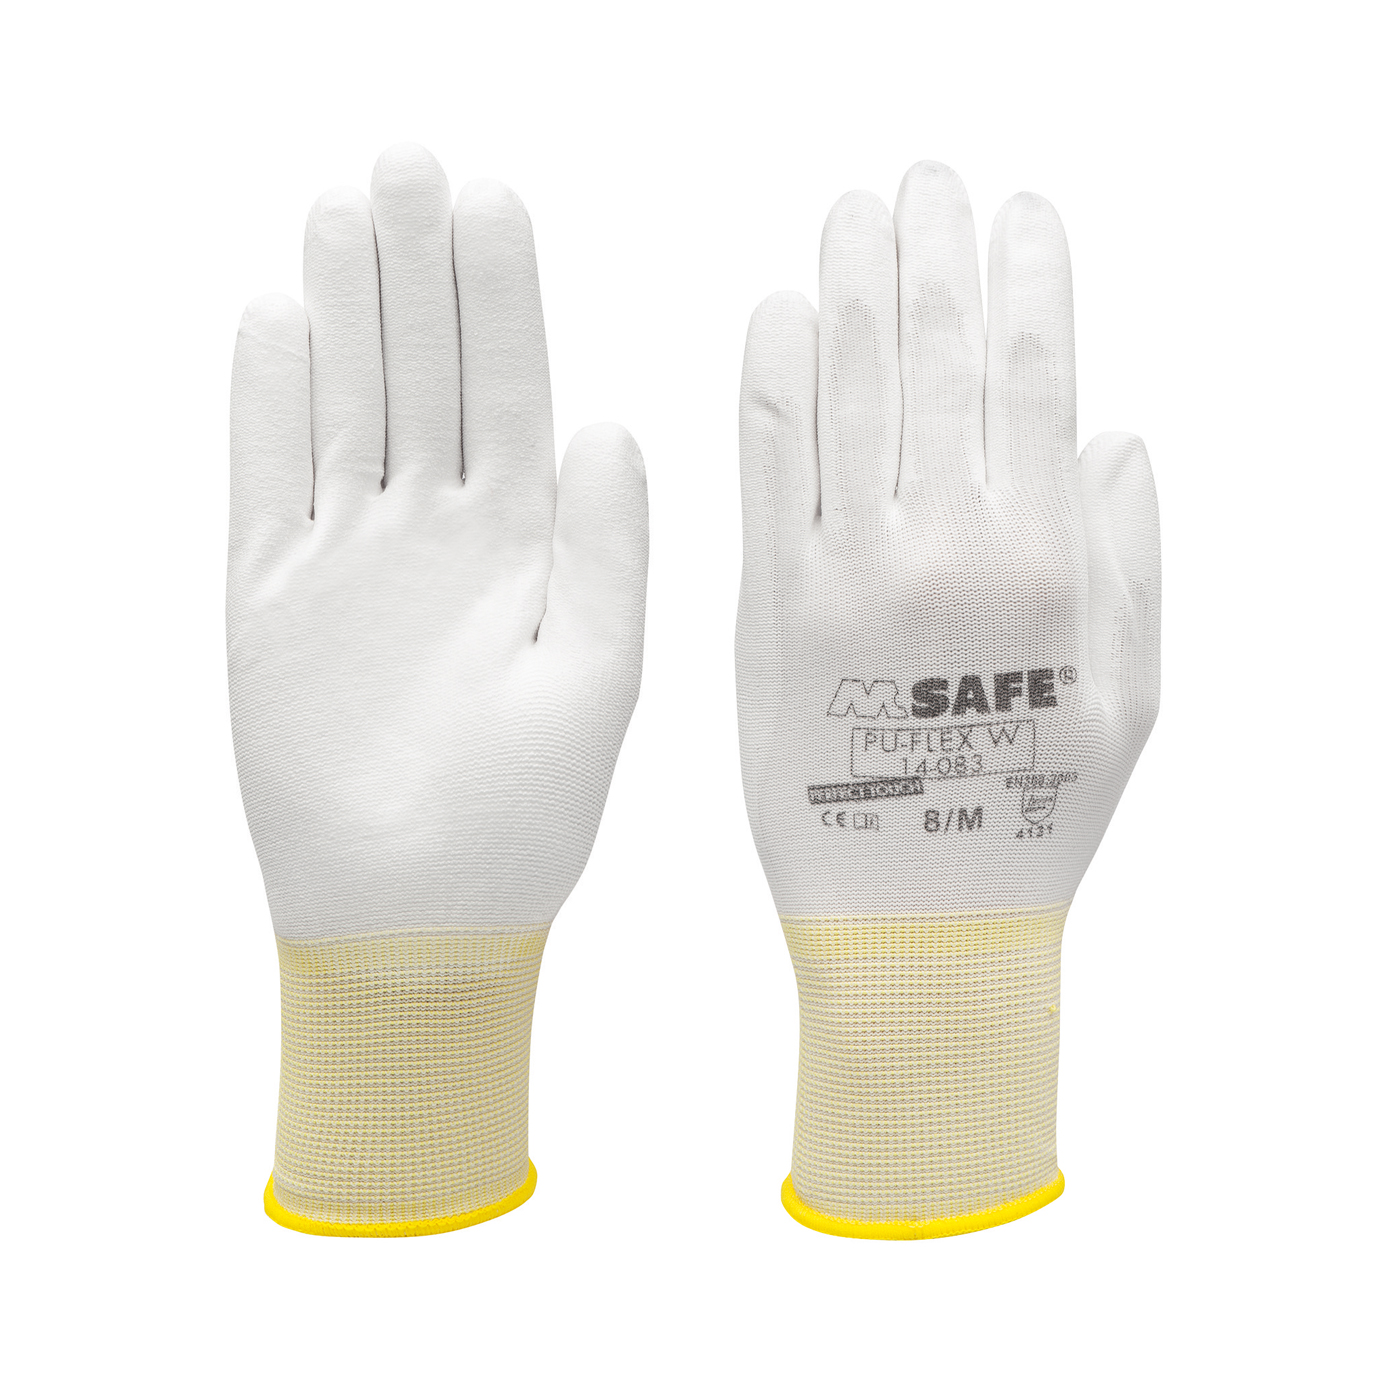 Polishing Gloves, Size M, White with yellow Wristband - 1 pair